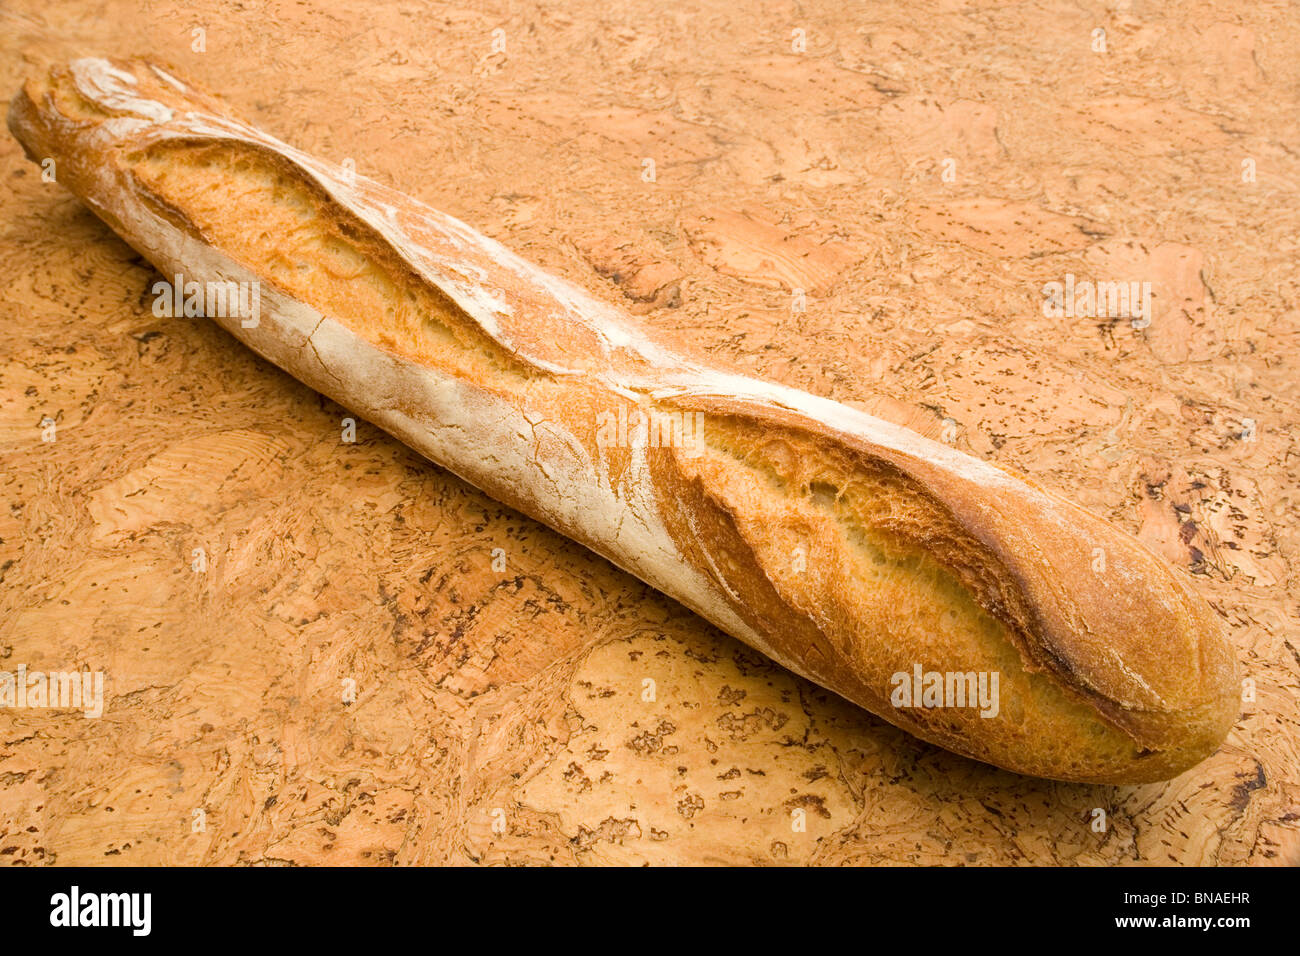 A traditional French stick of bread on a cork background (France). Baguette traditionnelle de pain sur fond de liège (France). Stock Photo